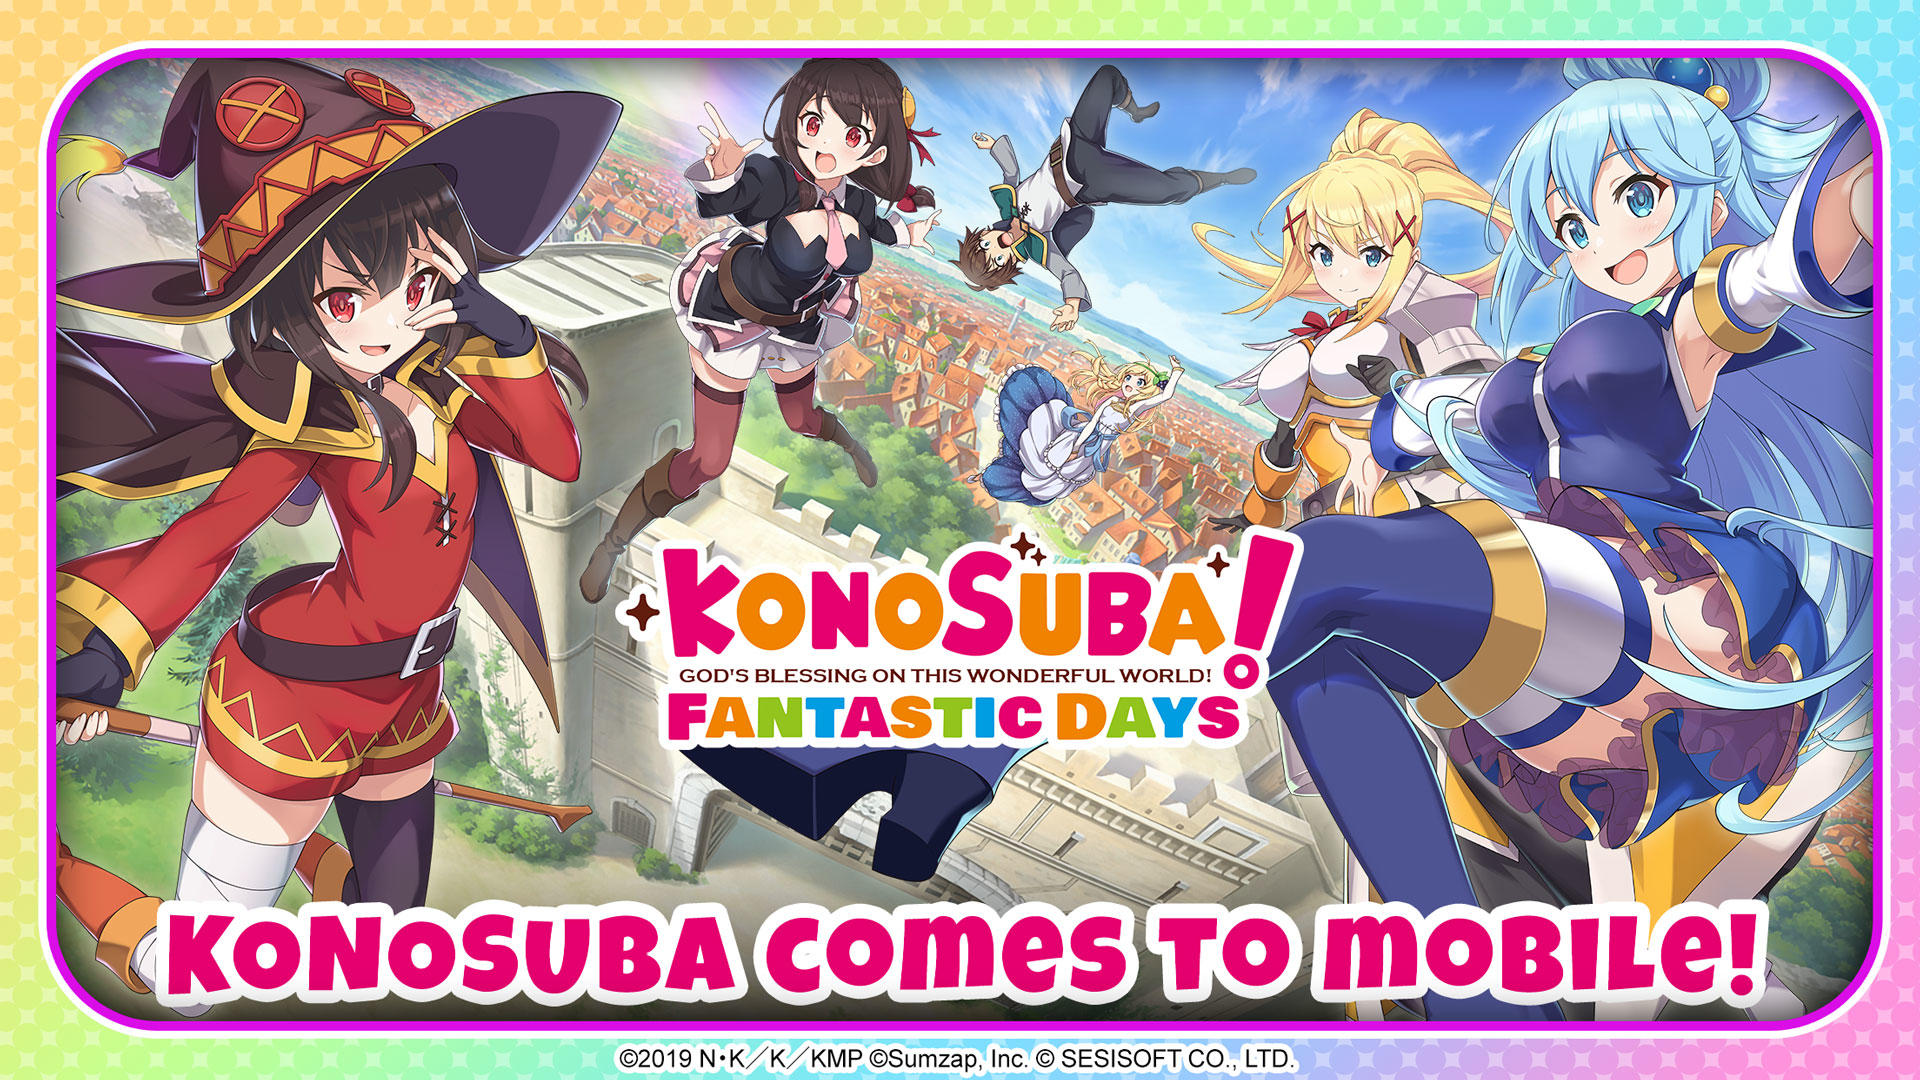 KonoSuba: Fantastic Days: Endearing Interviews With Aqua And Kazuma